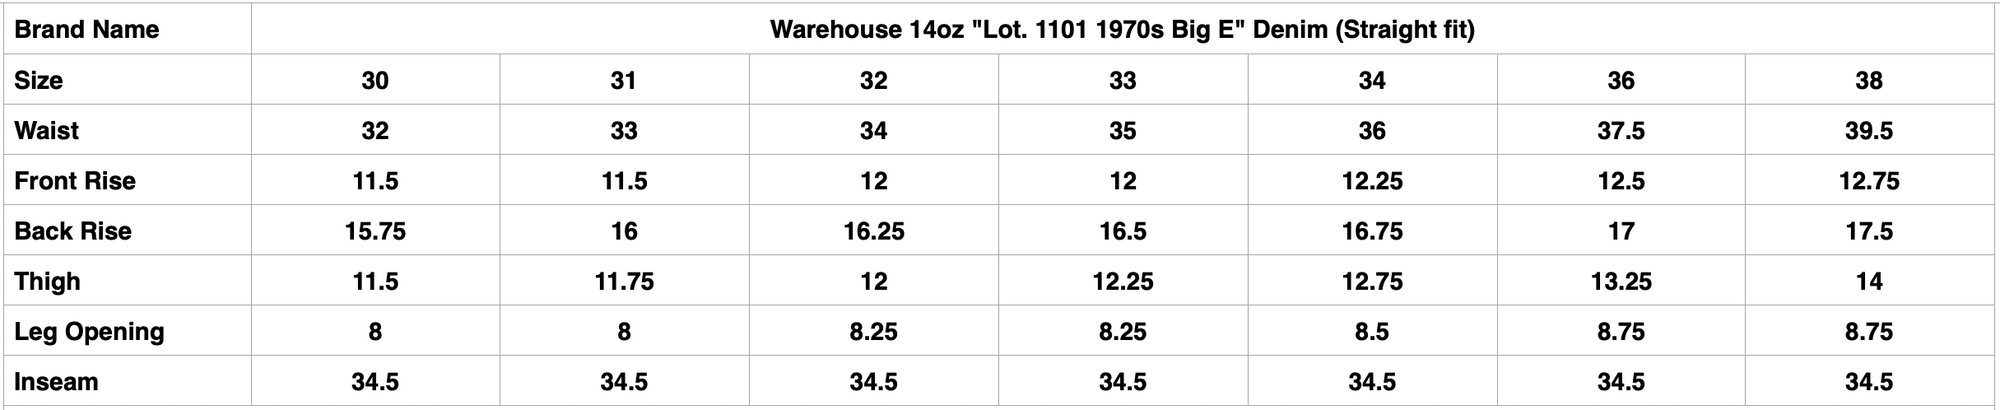 Warehouse 14oz "Lot. 1101 1970s Big E" Denim  (Straight fit)